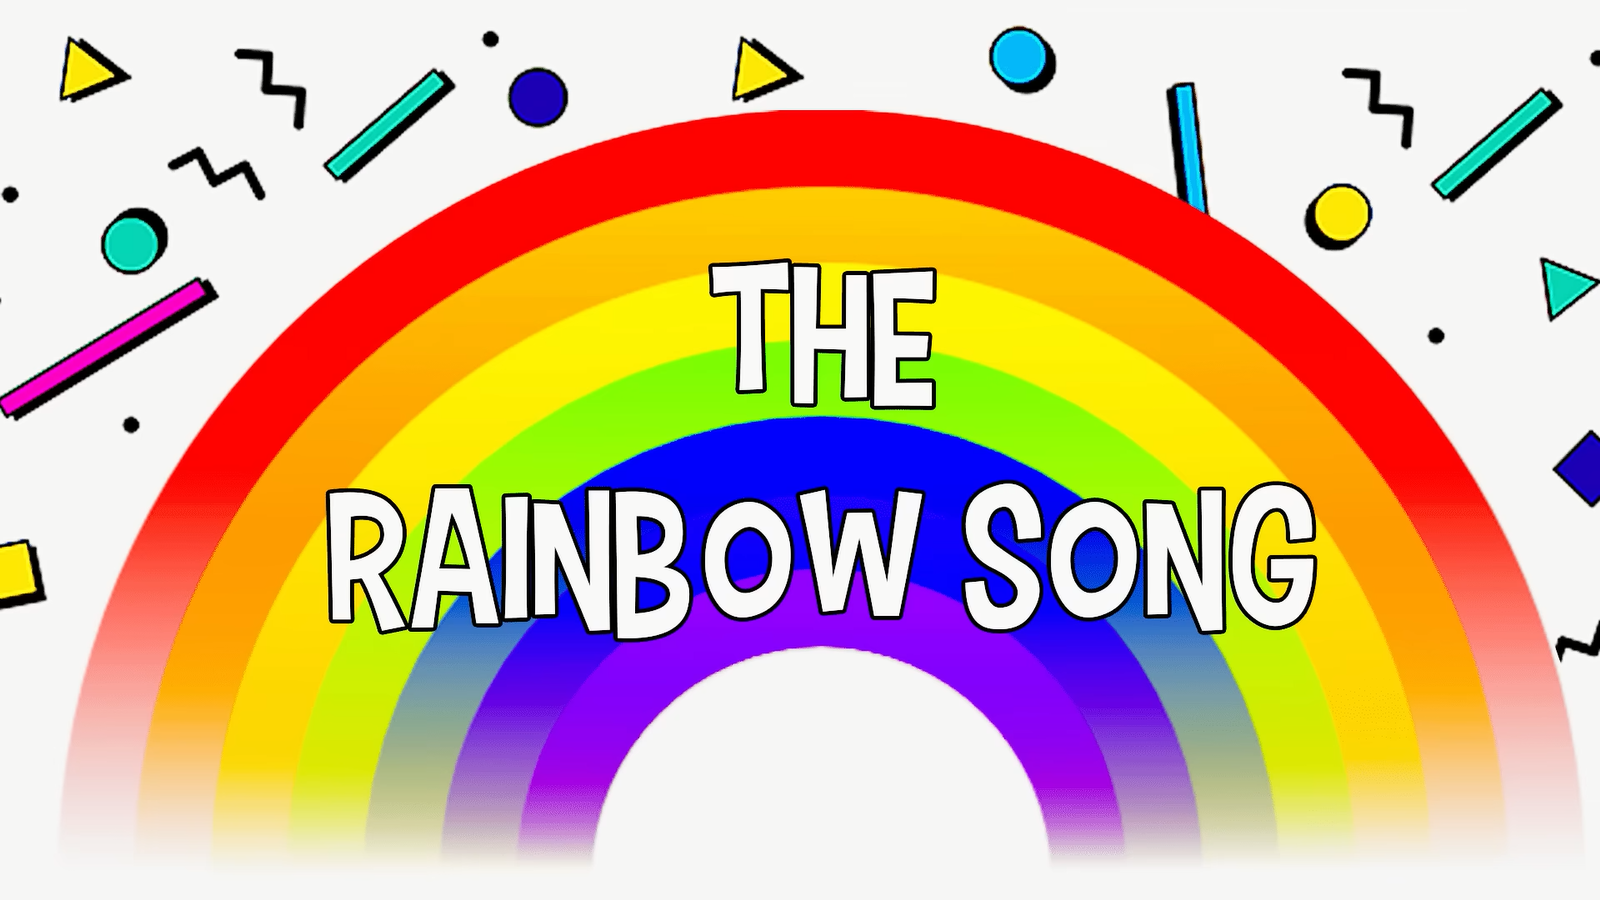 Rising (Rainbow album) - Wikipedia